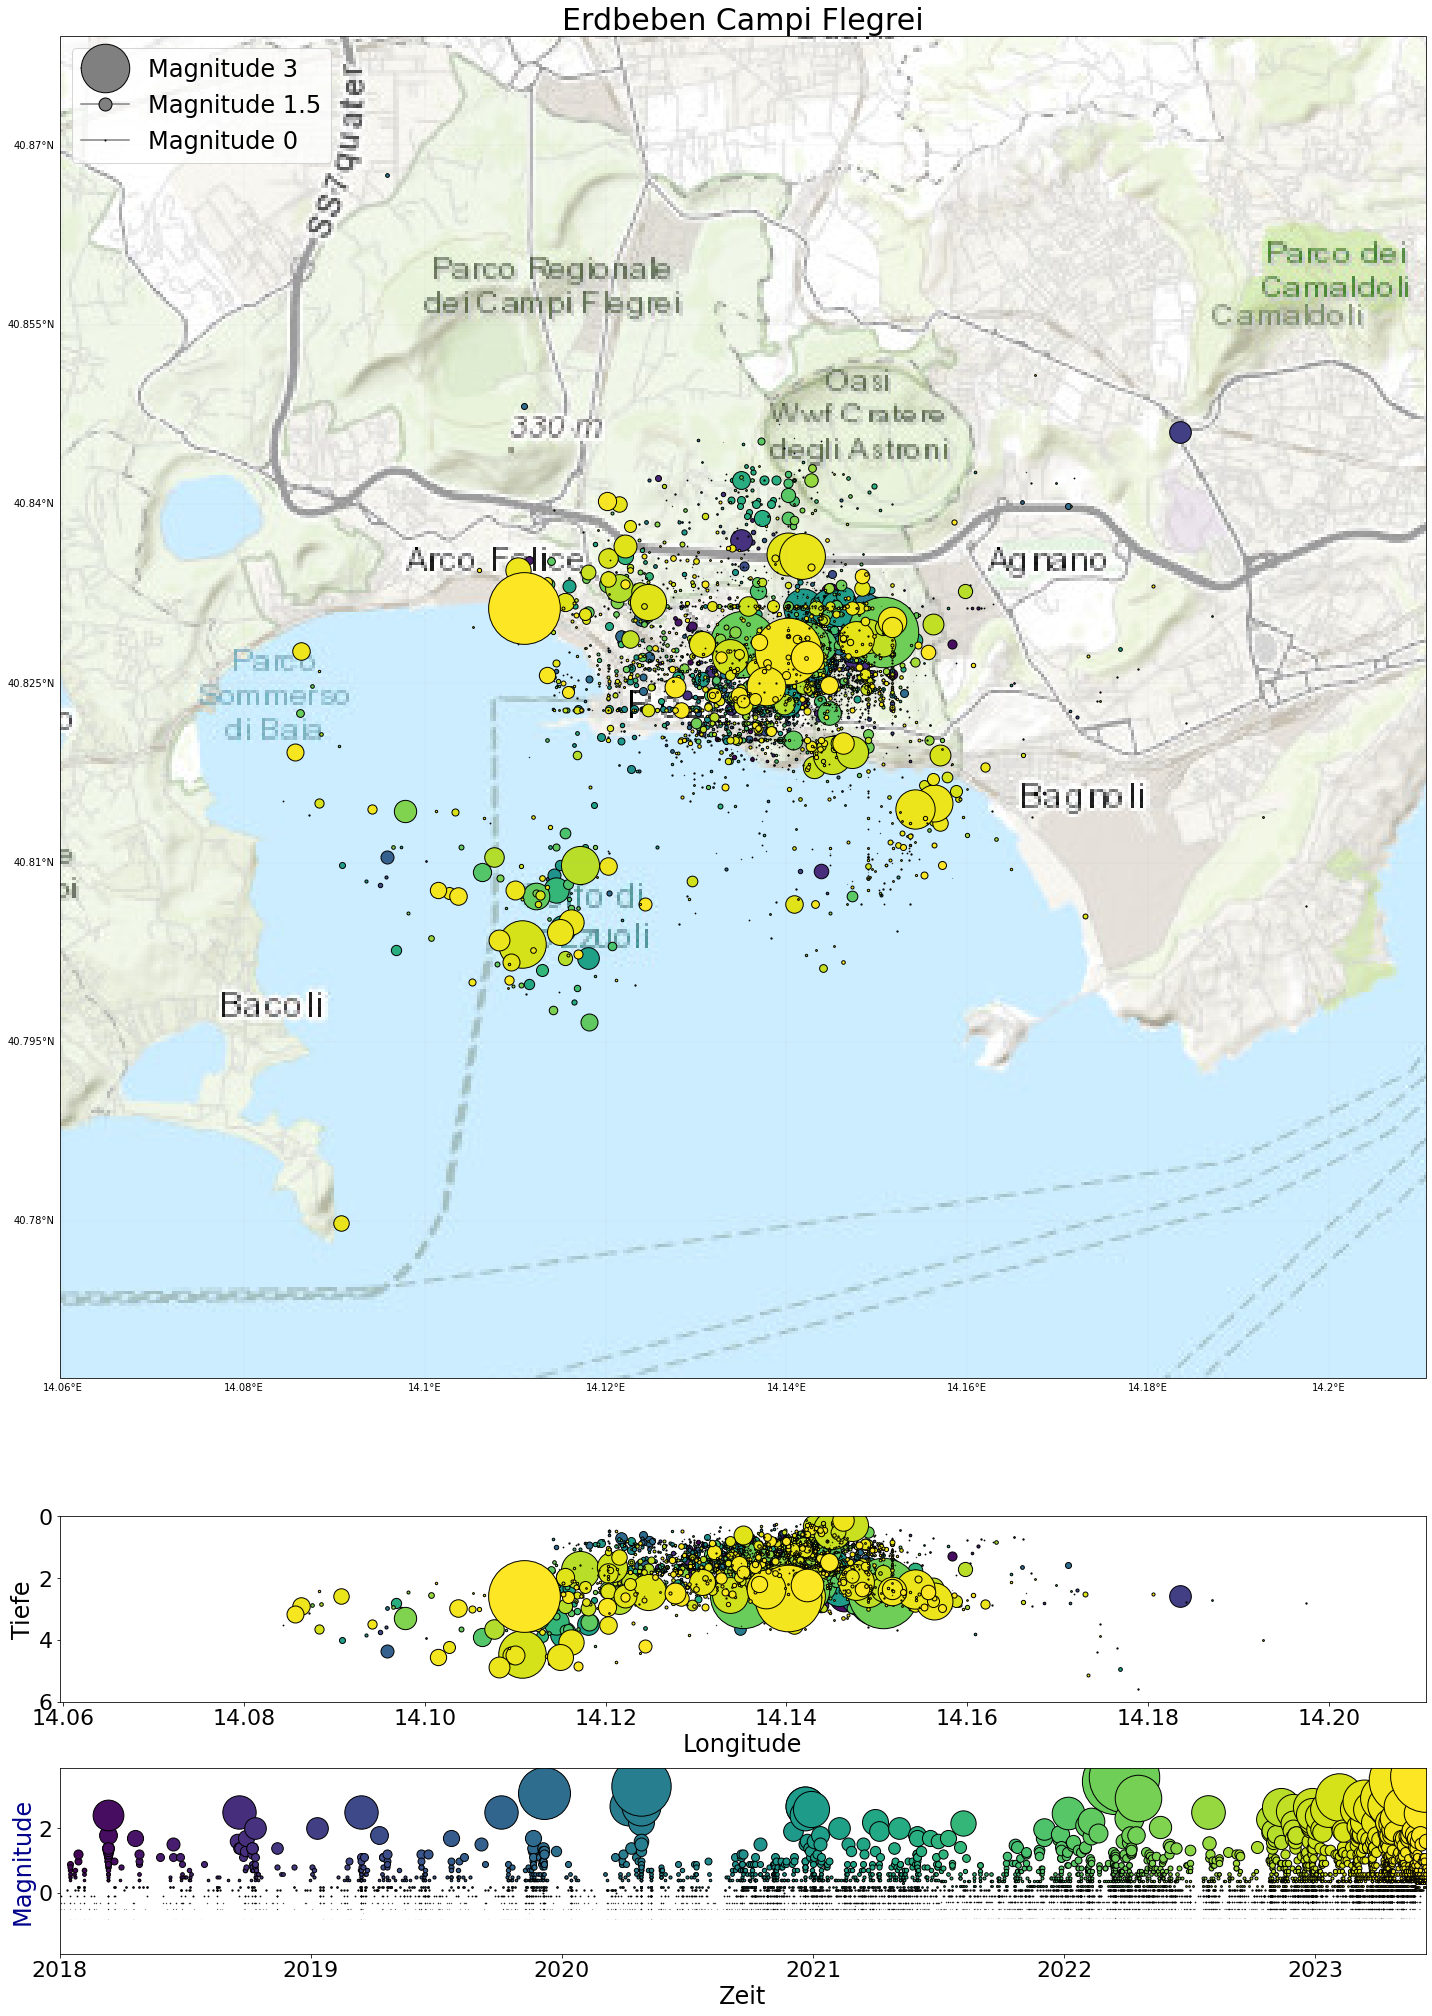 Earthquake activity in the Campi Flegrei since 2018